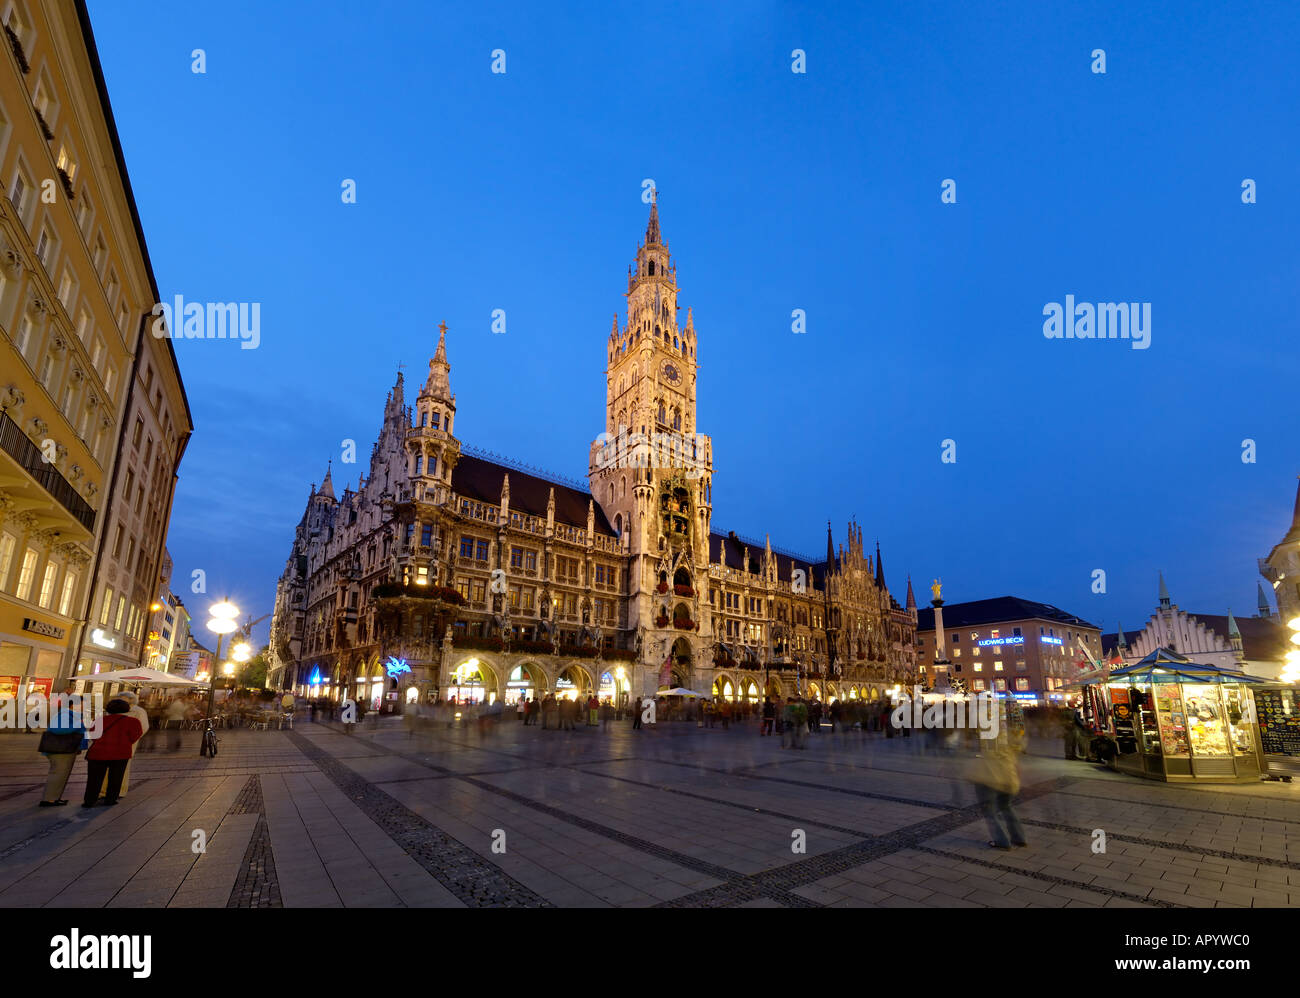 Neues Rathaus (New Town Hall), Marienplatz, at night, Munich (Munchen / Muenchen), Bavaria (Bayern), Germany Stock Photo